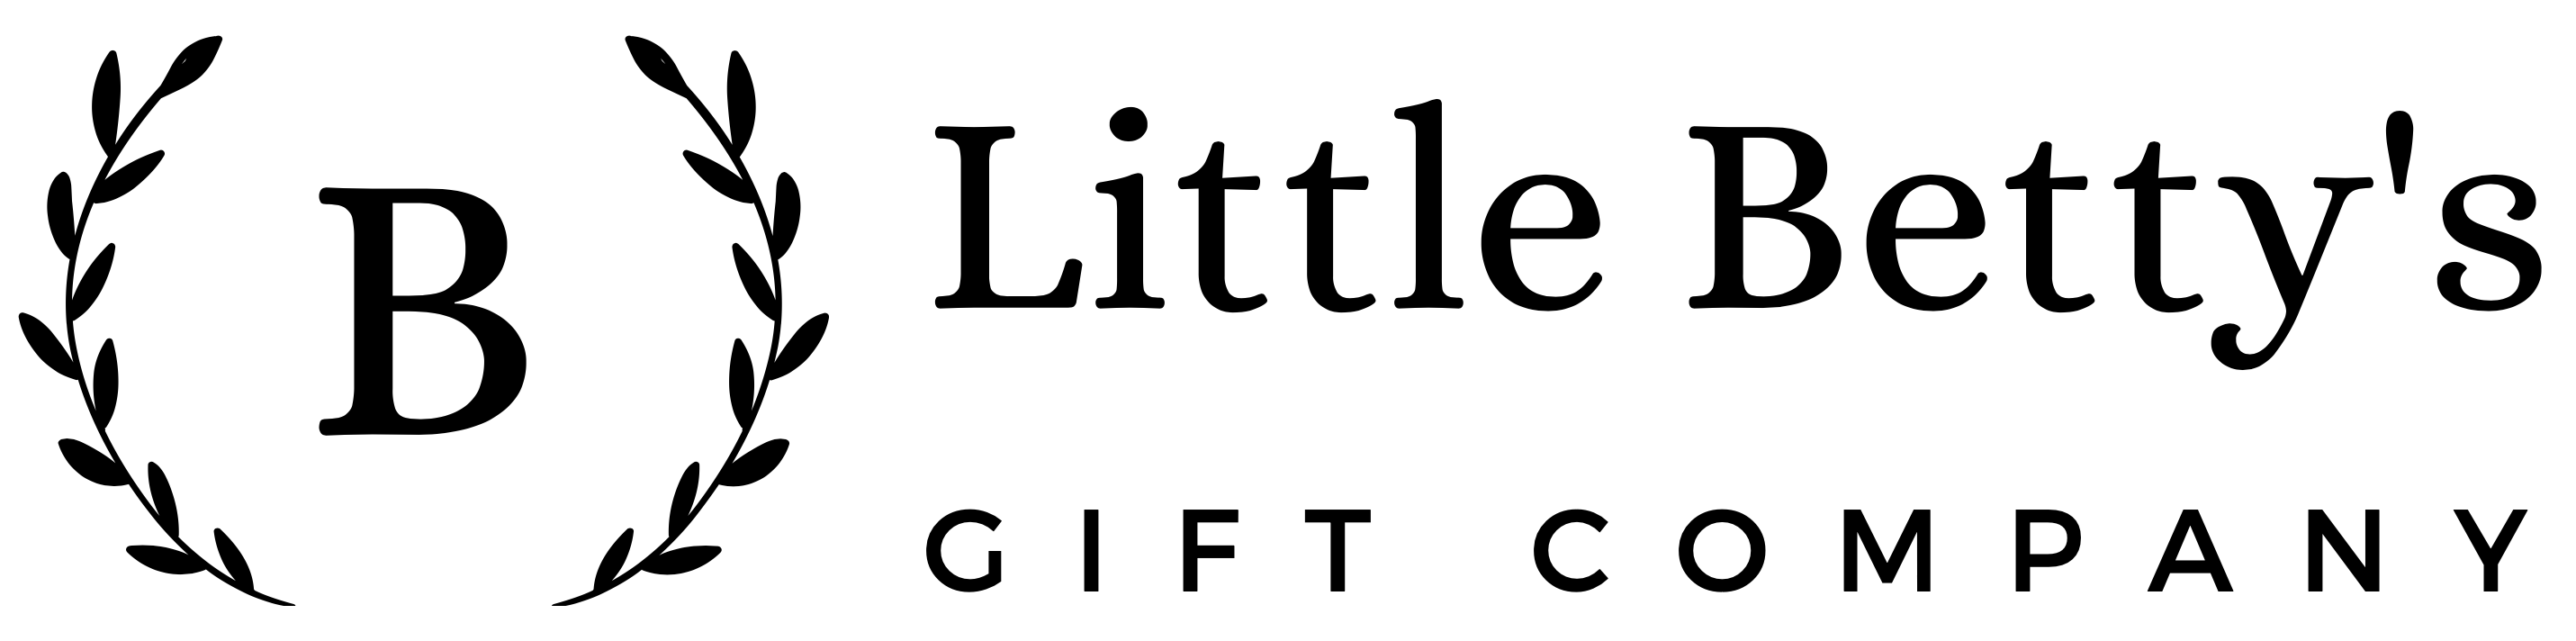 Little Betty's Gift Company